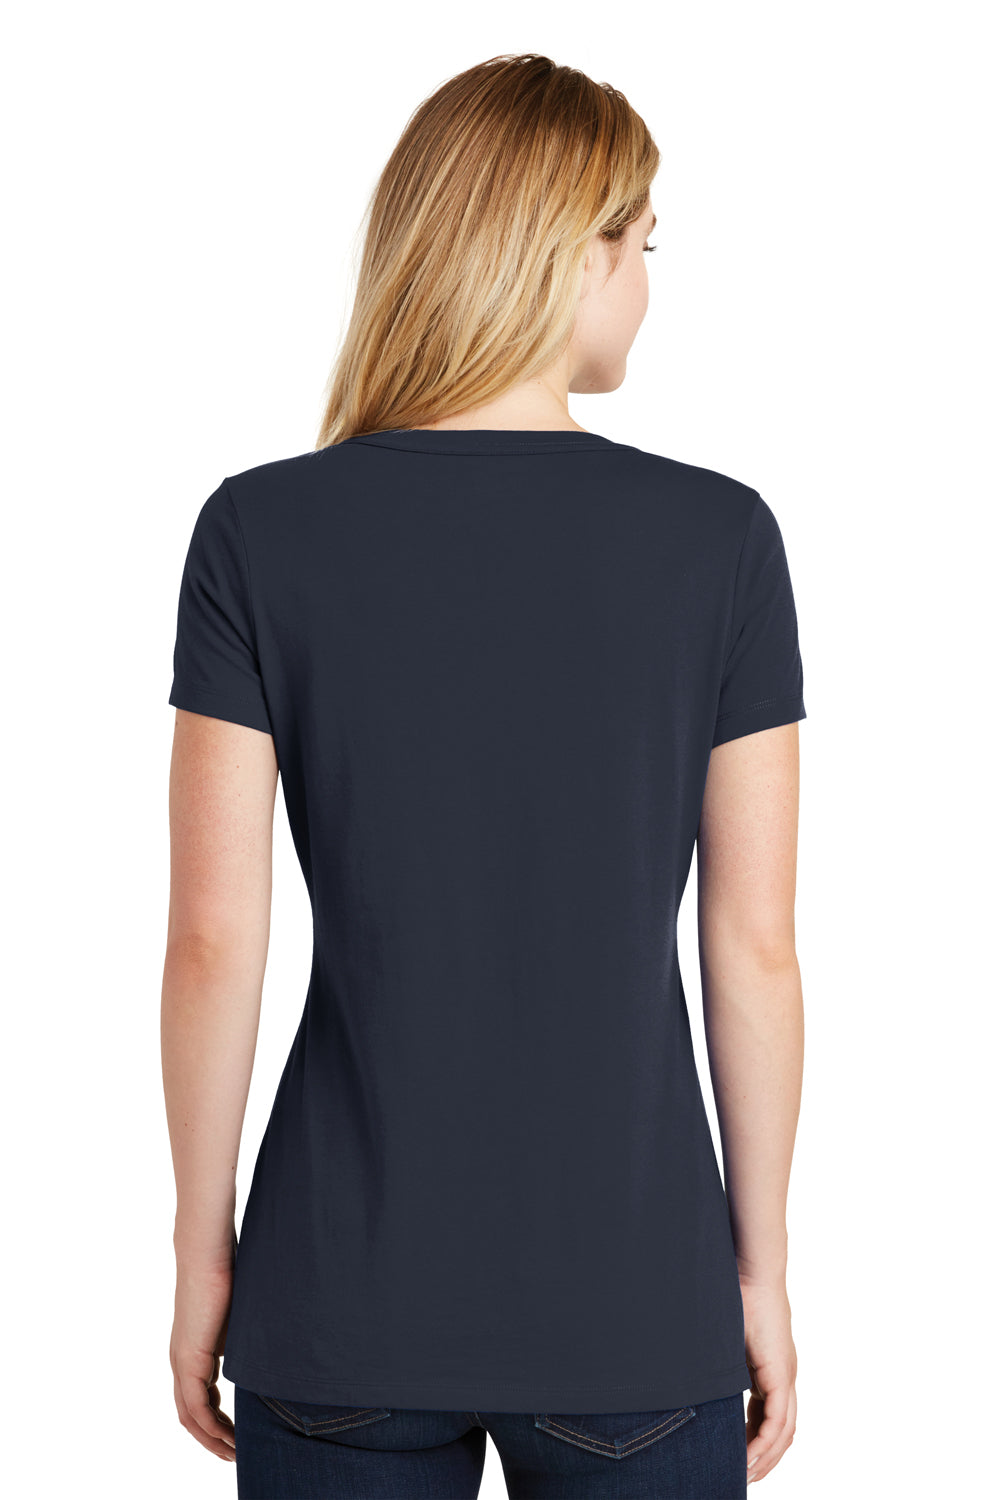 New Era LNEA101 Womens Heritage Short Sleeve V-Neck T-Shirt Navy Blue Back